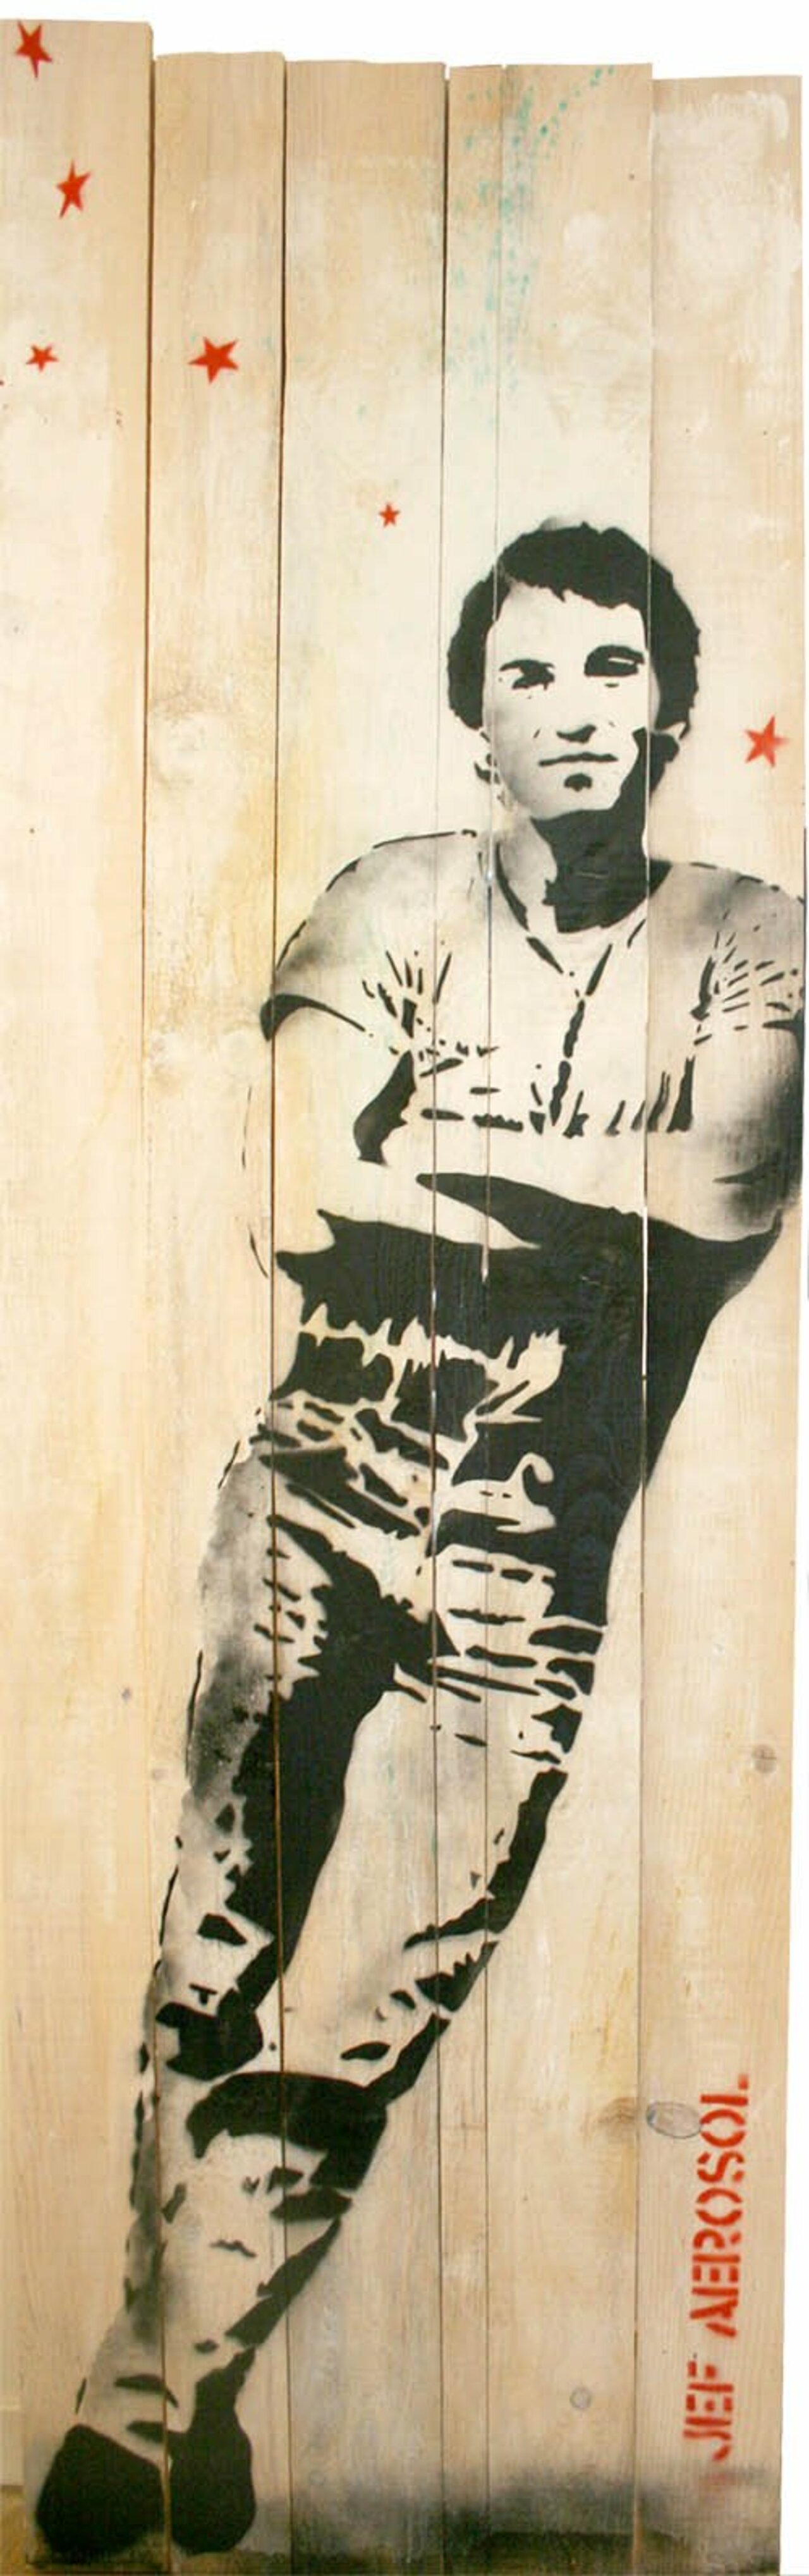 #Streetart #urbanart #graffiti #pochoir sur palissade "Bruce Springsteen", 2012 de l'artiste français Jef Aérosol. https://t.co/pc2Q7XmhnB